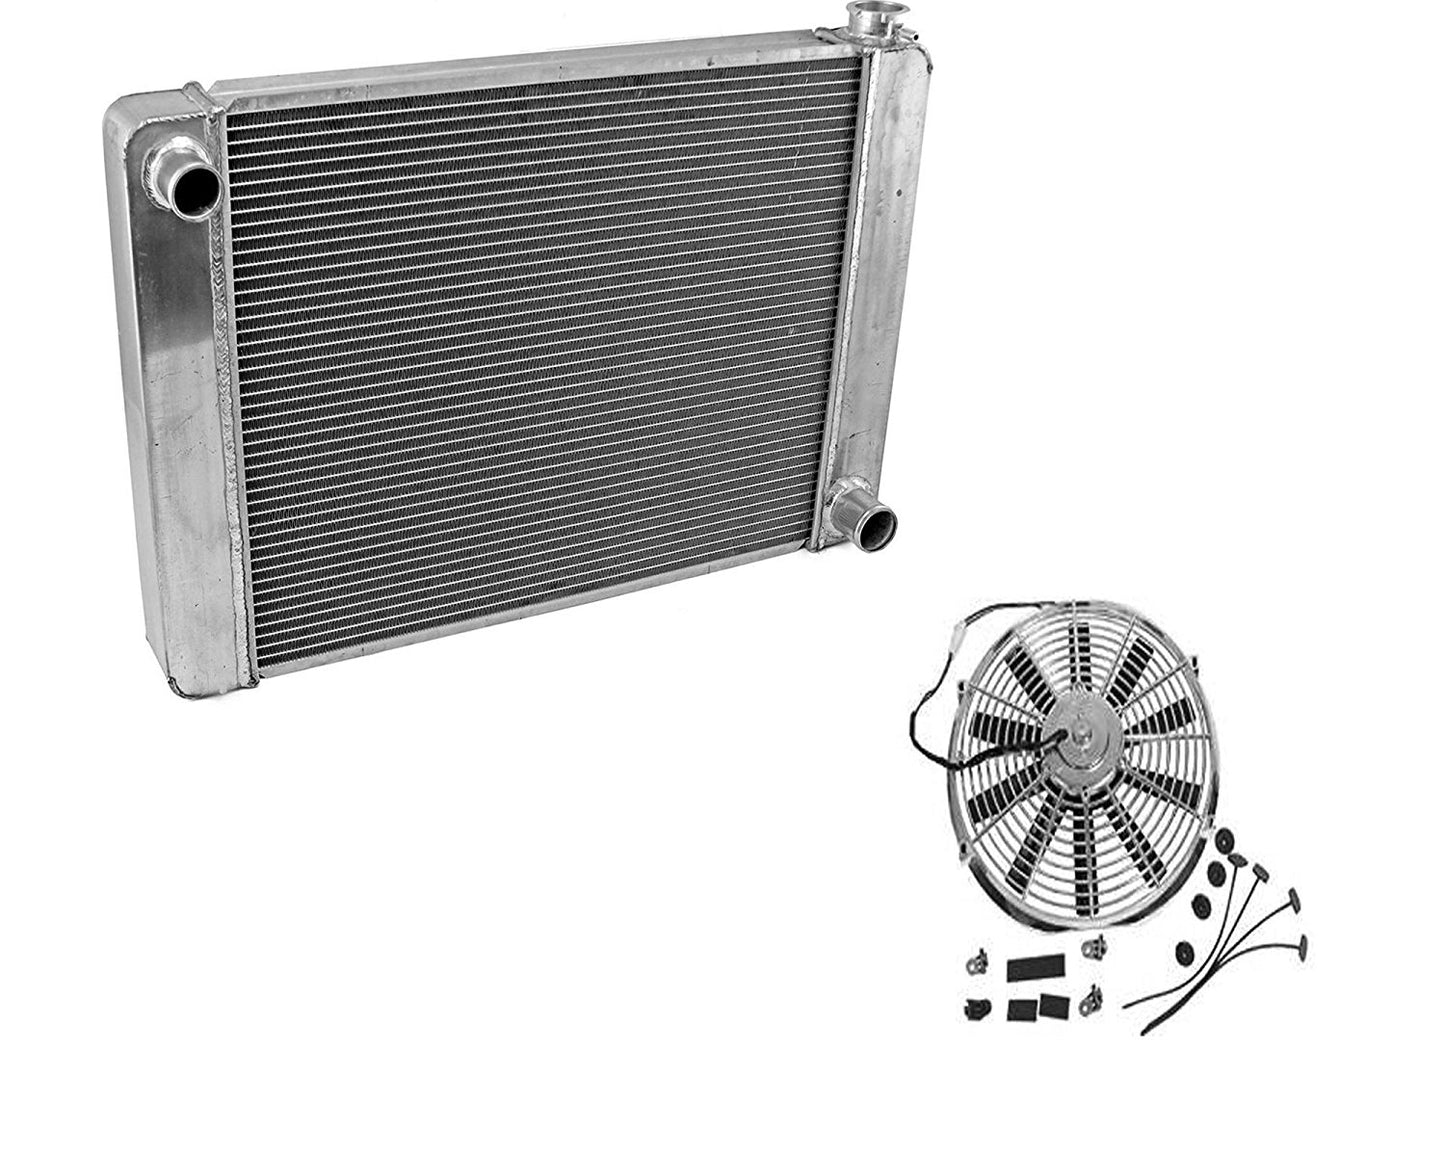 For SBC BBC Chevy GM Fabricated Aluminum Radiator 22" x 19" x3" & 10" Chrome Straight Blade Cooling Radiator Fan